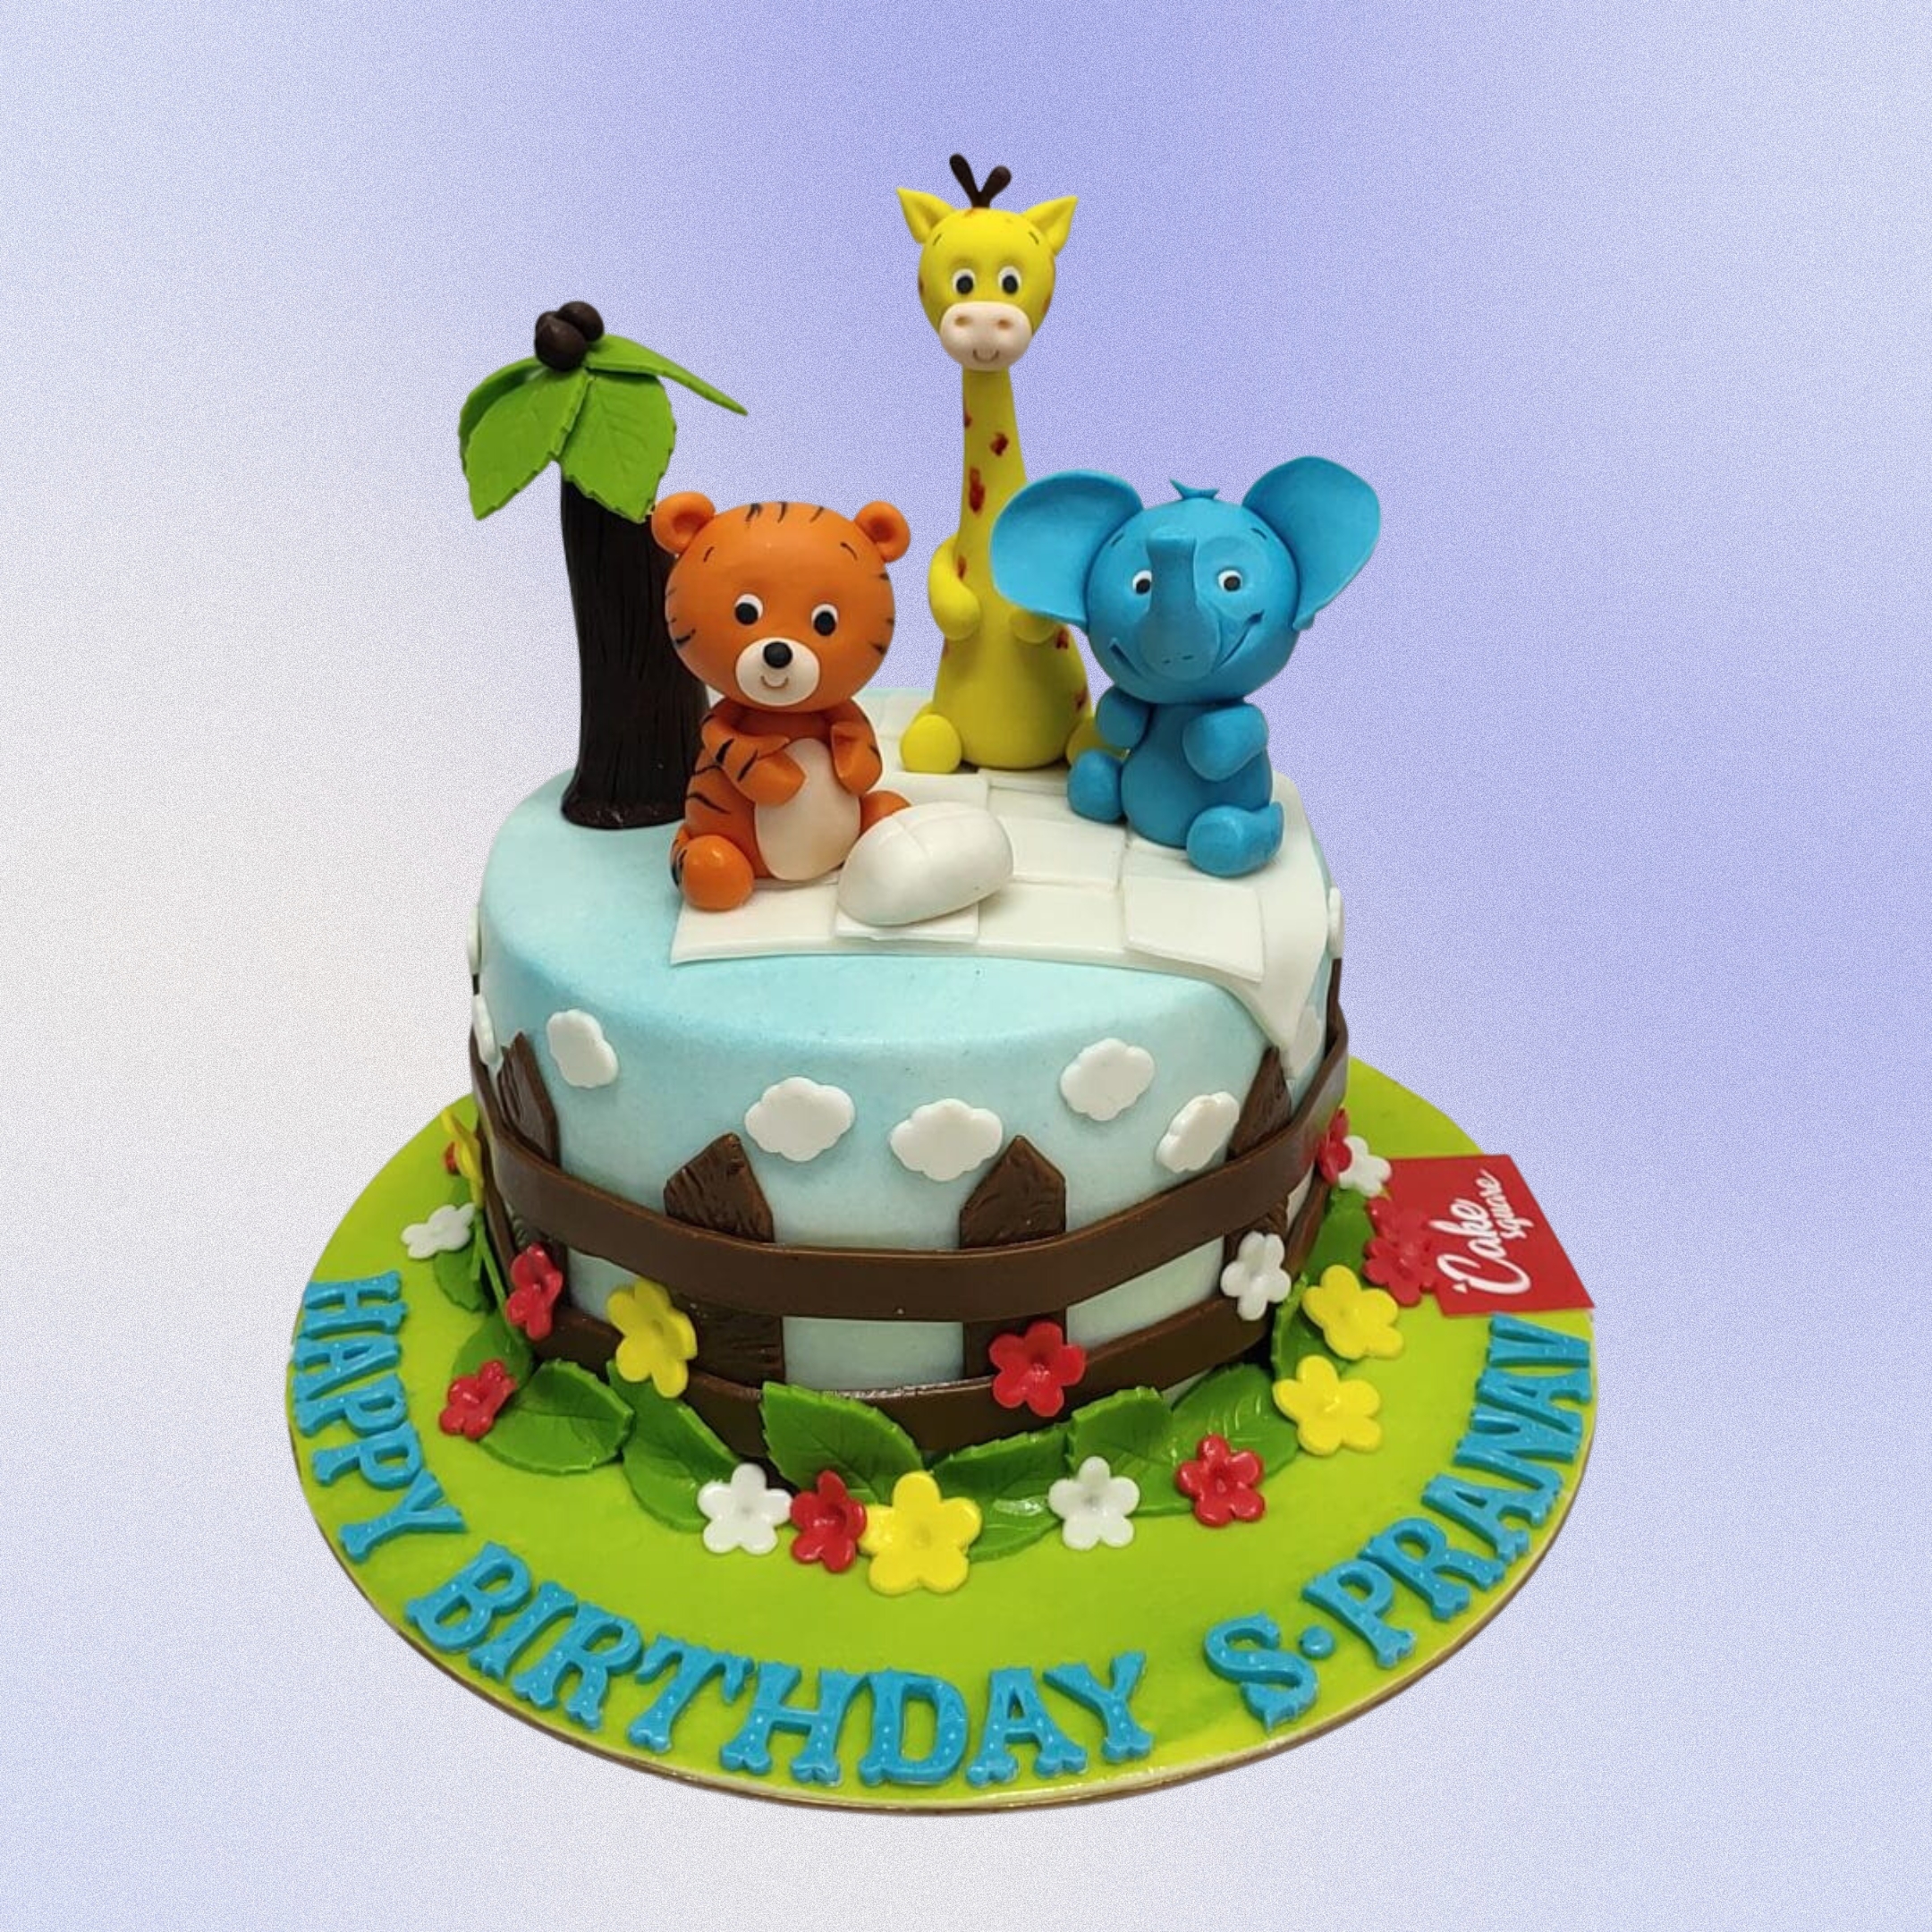 AMAZING BIRTHDAY CAKE IDEAS KIDS WILL LOVE - YouTube-suu.vn